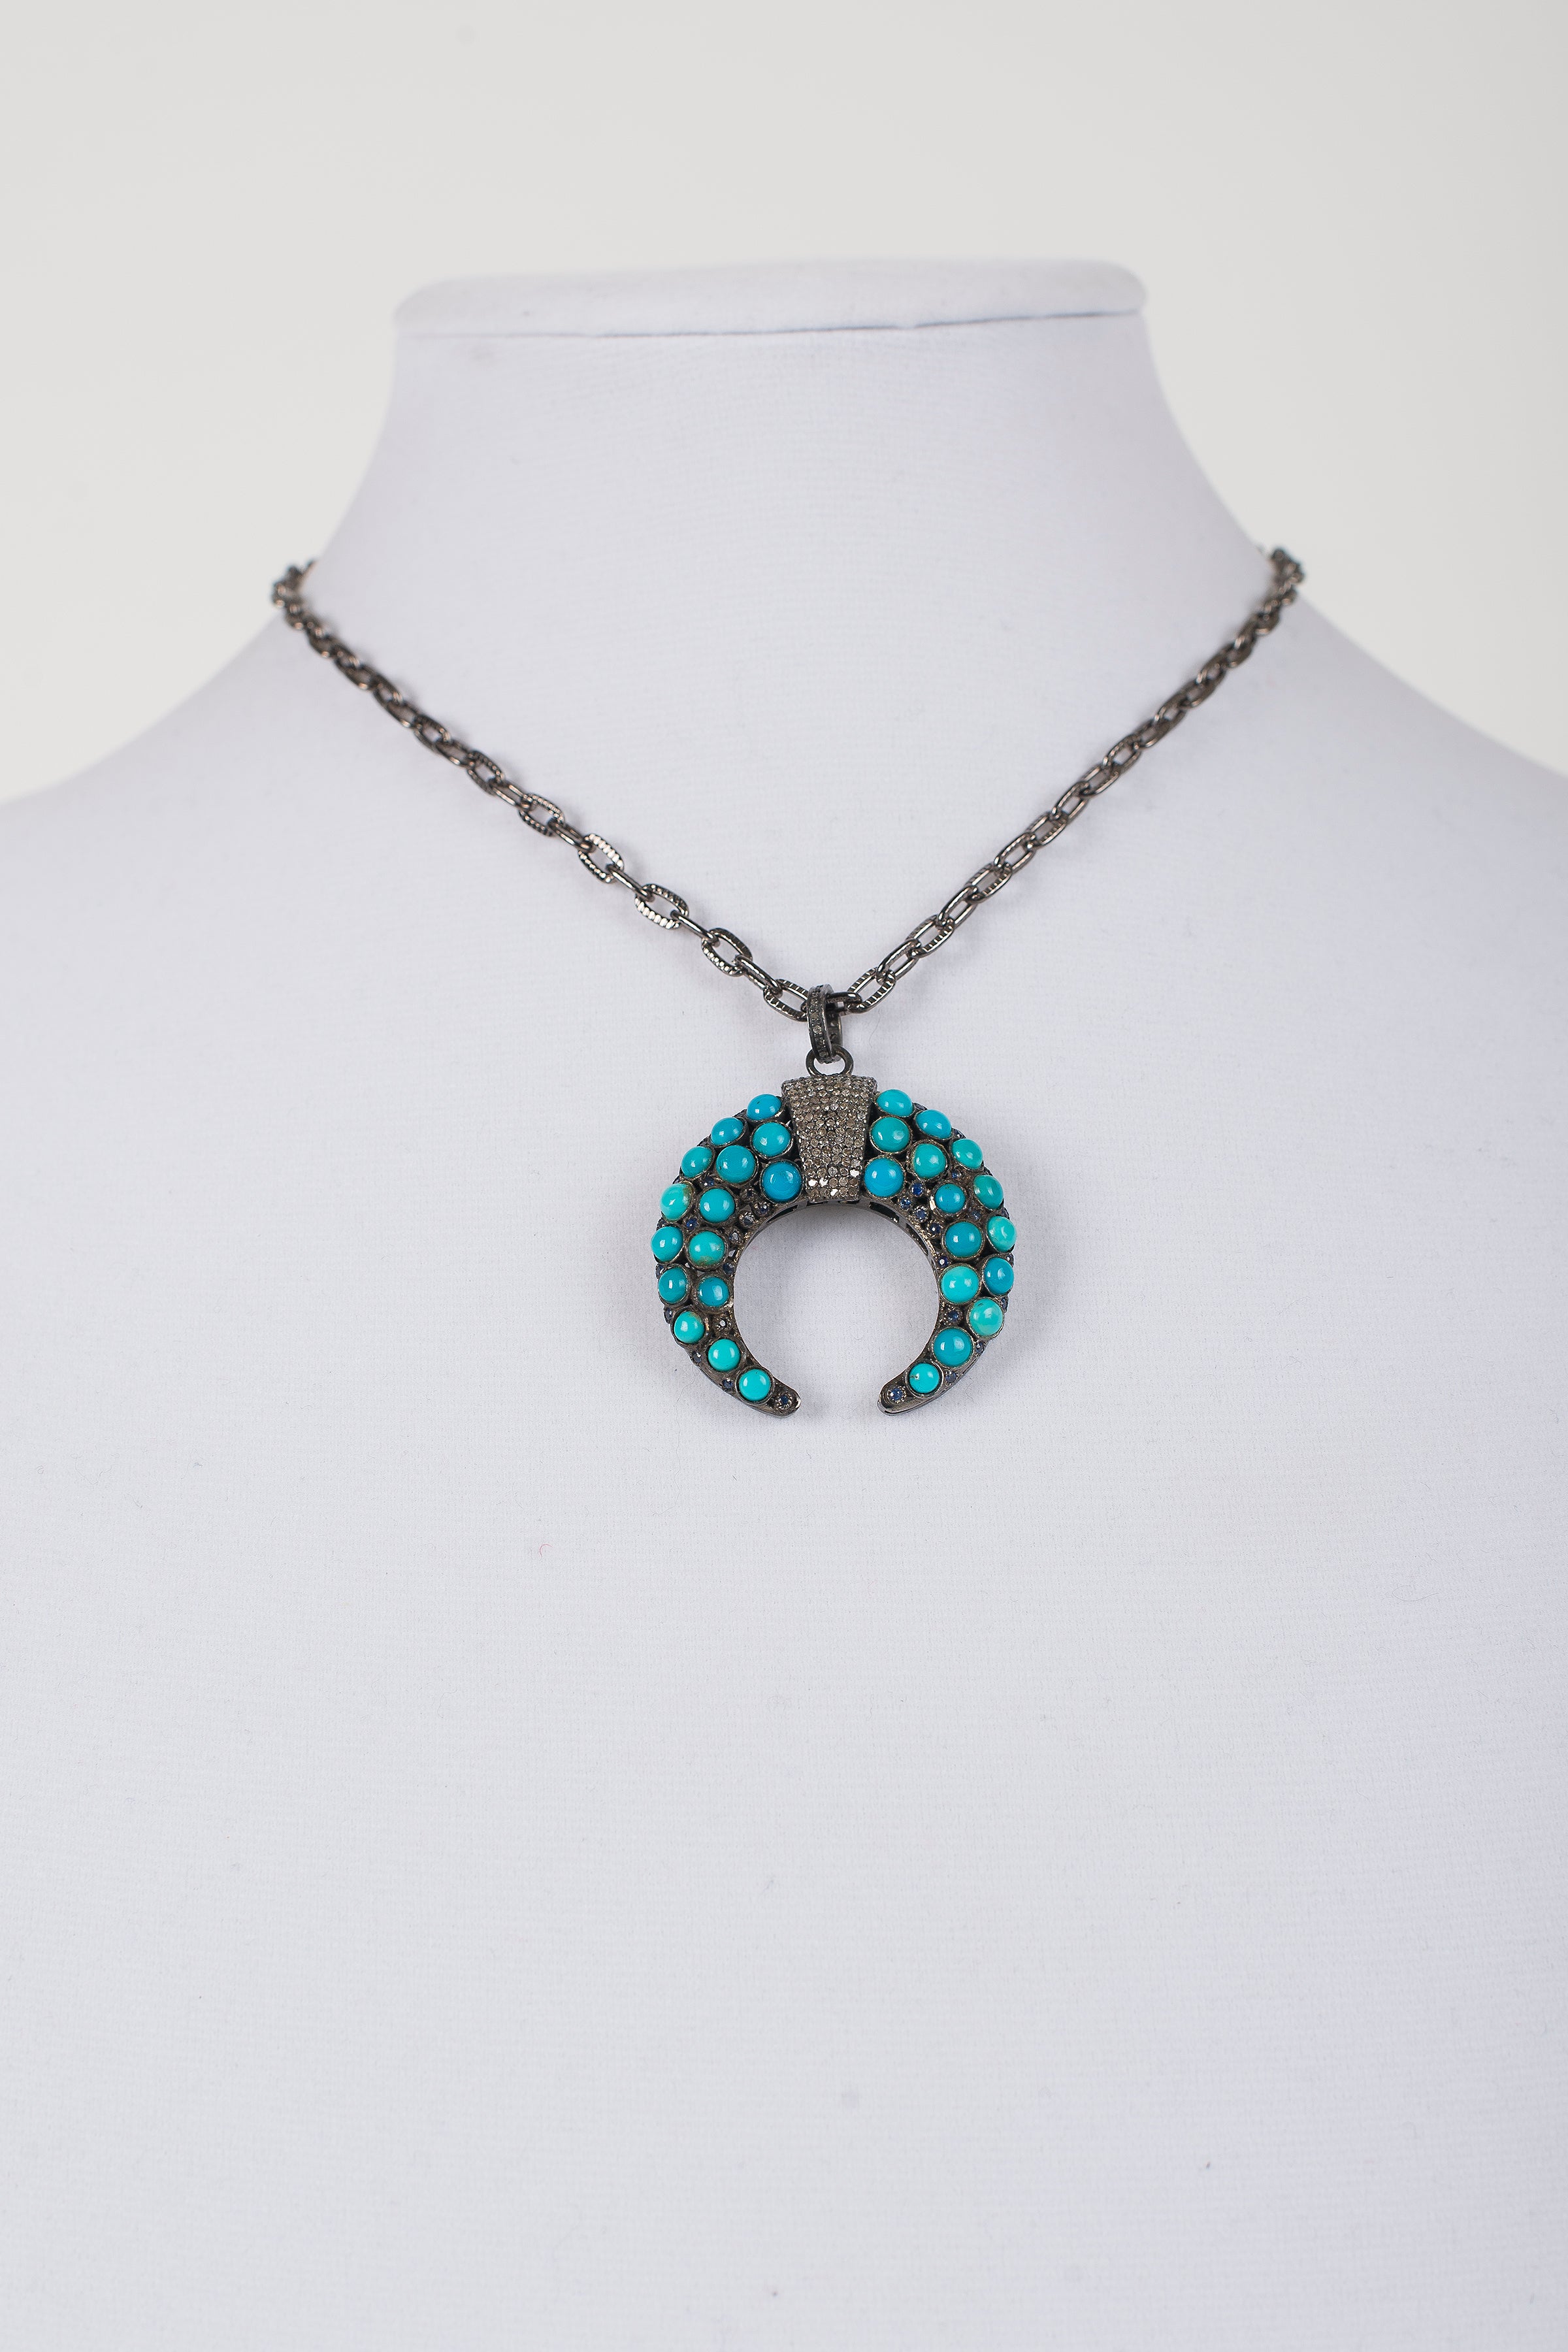 Pave Diamond and Turquoise Pendant on Gunmetal Chain